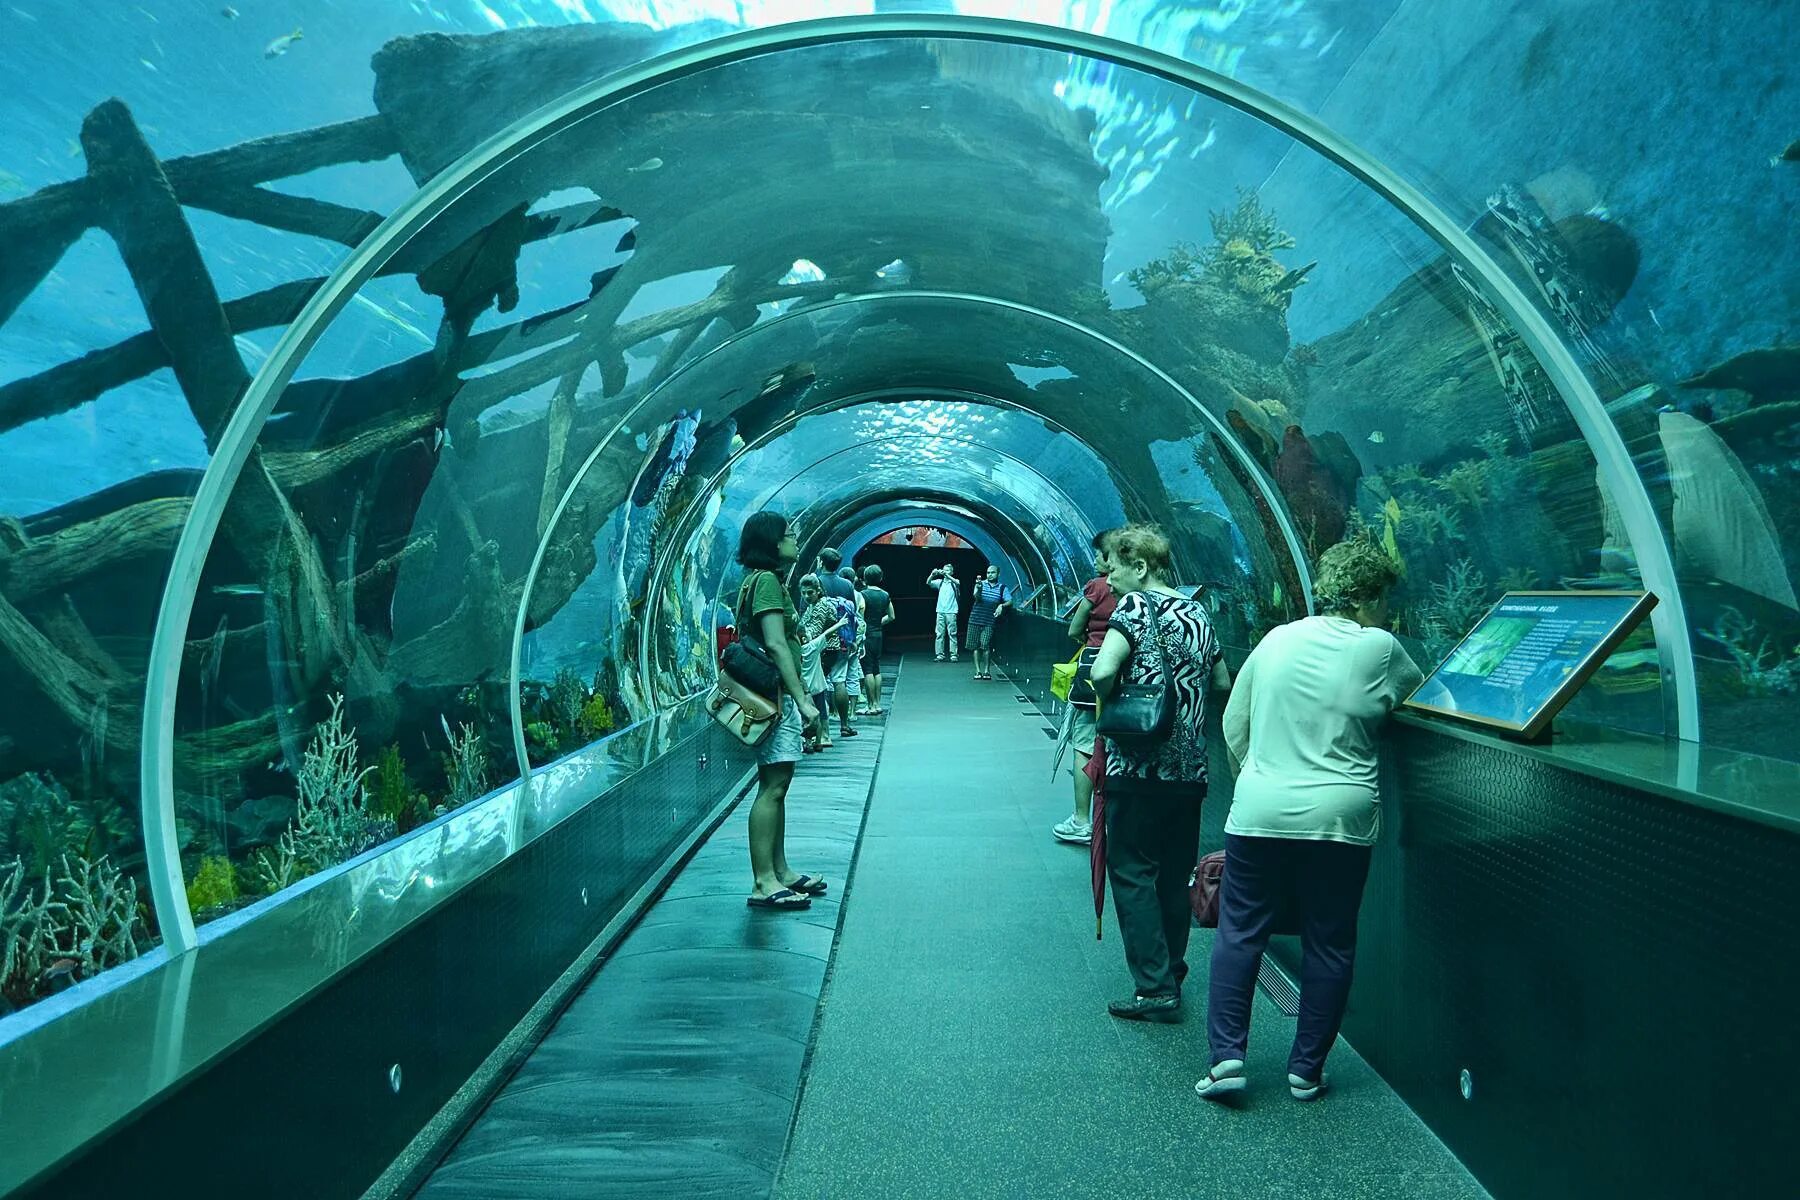 Океанариум в Сингапуре s.e.a. Aquarium. Сингапур Сентоза океанариум. Marine Life Park, Сингапур. Морская жизнь (Marine Life Park)в Сингапуре. Отзыв sea life